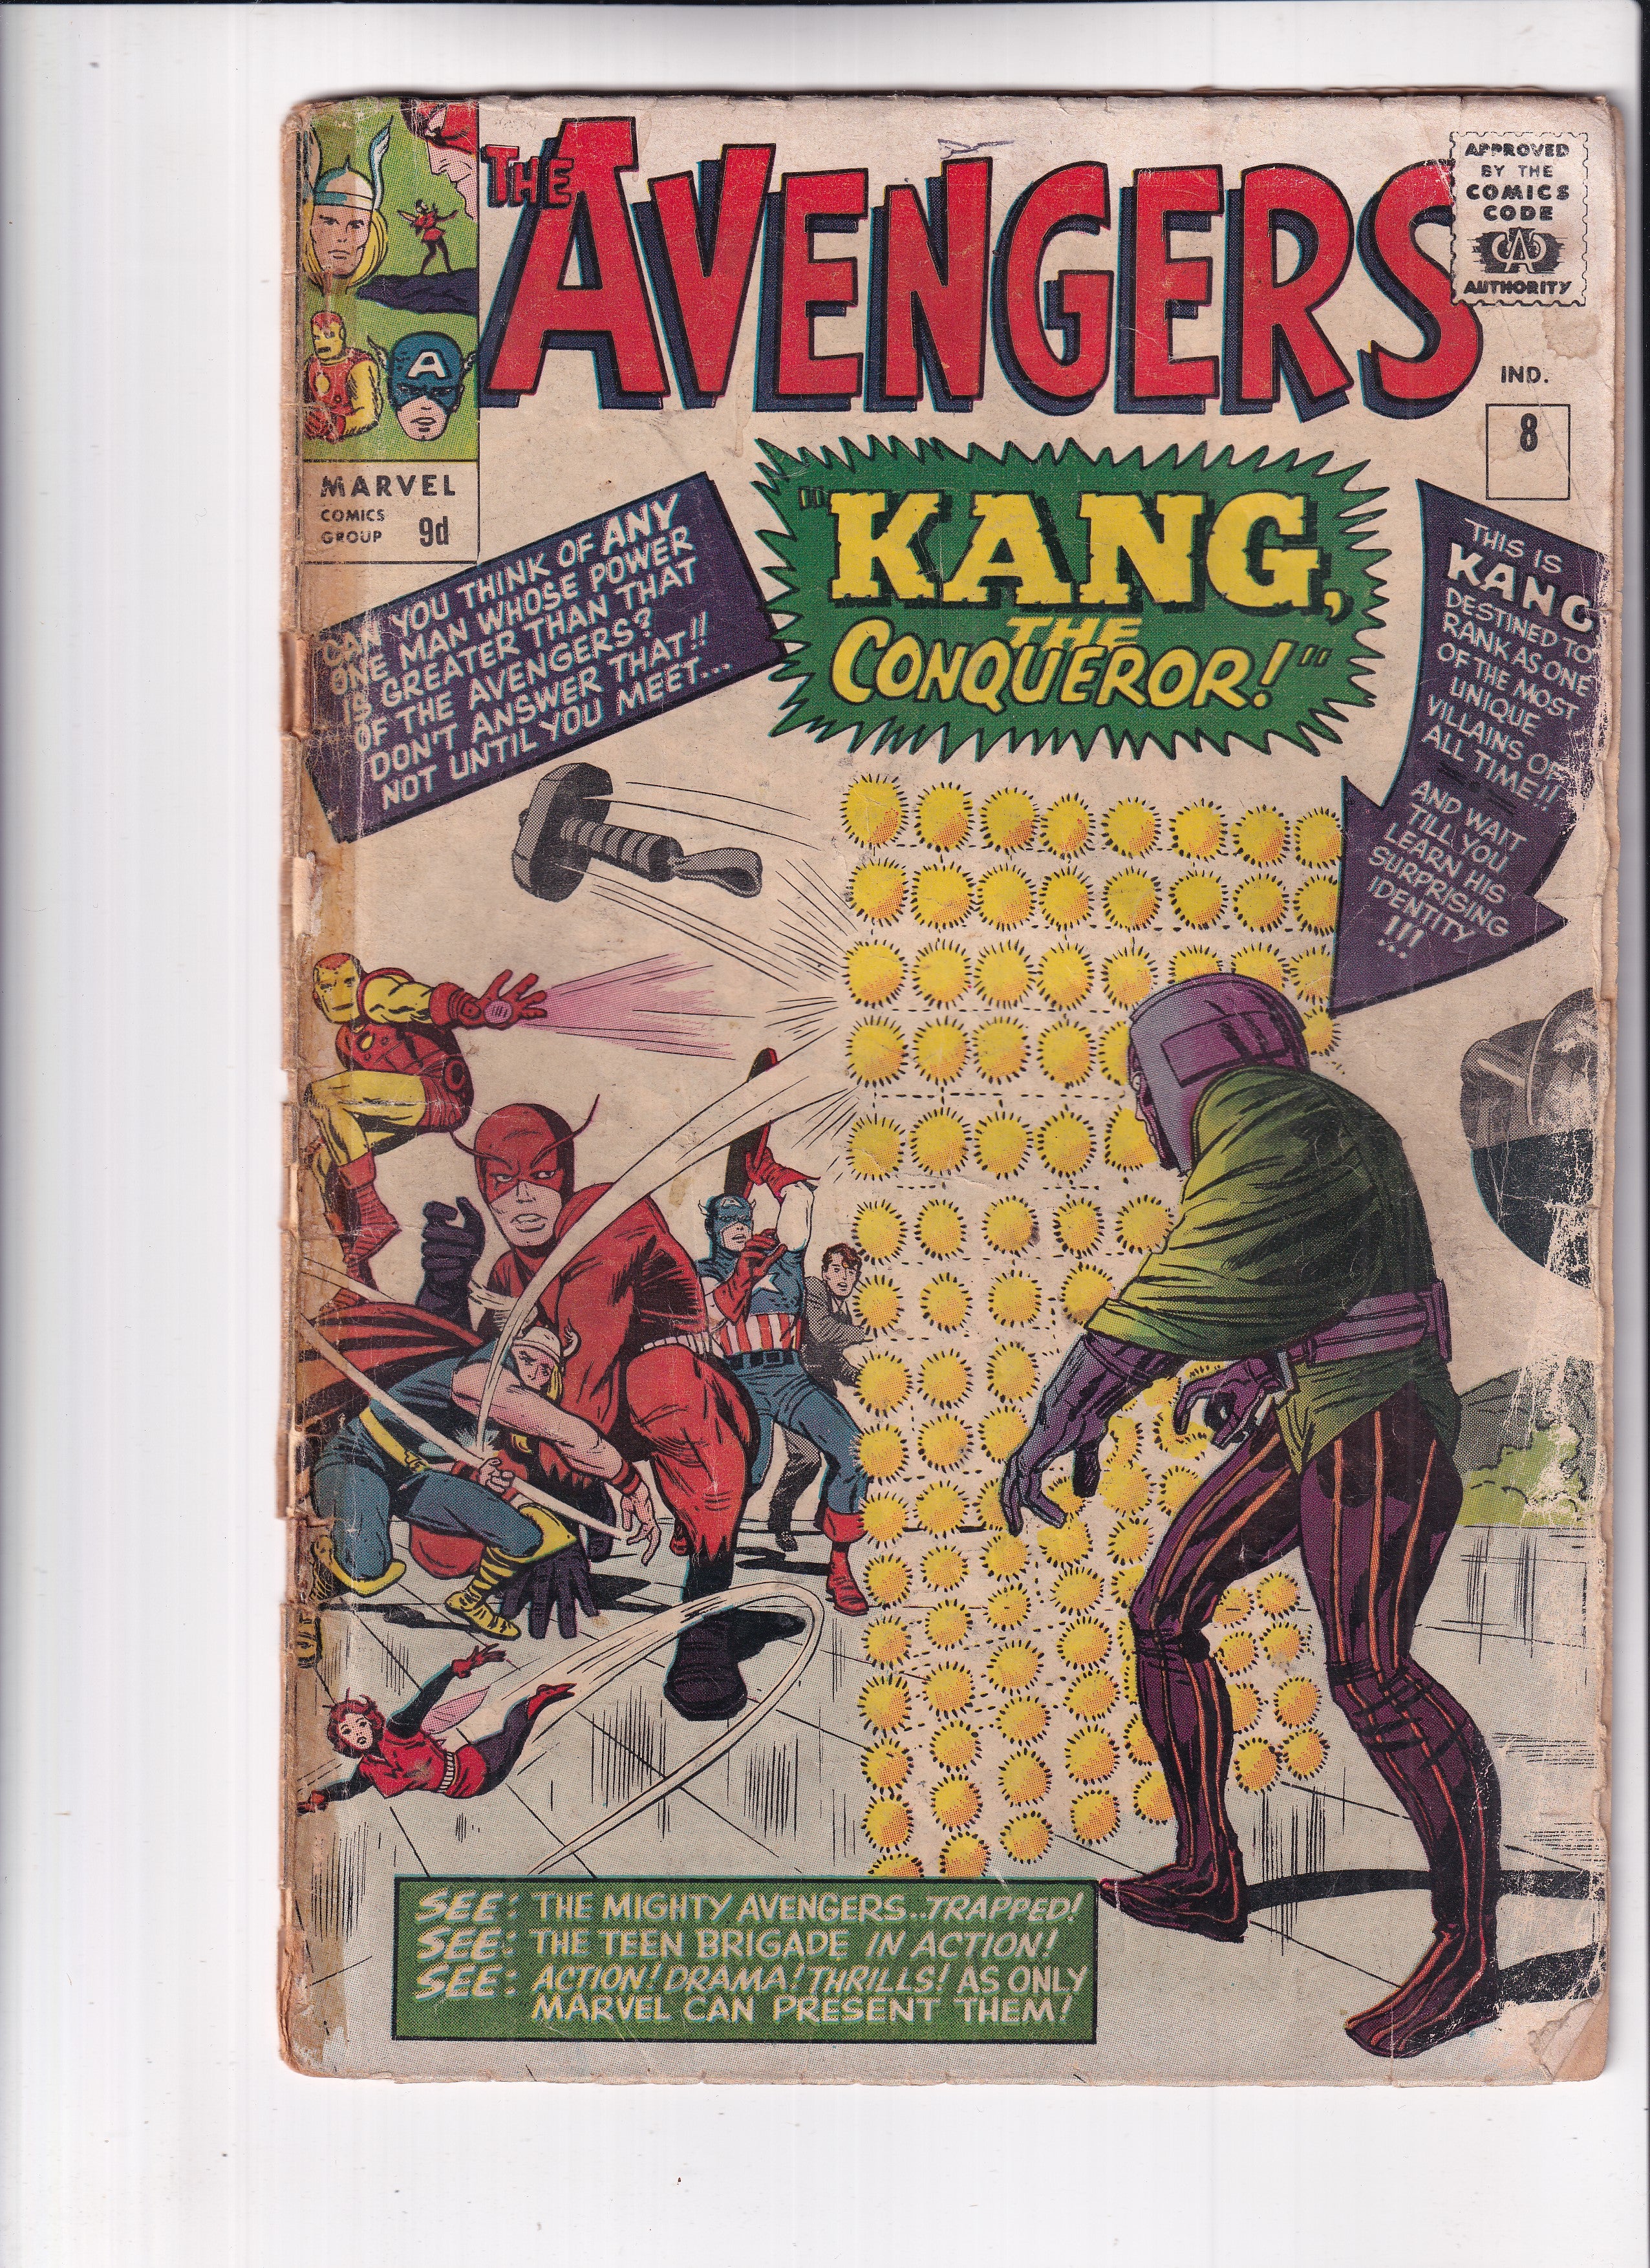 AVENGERS #8 (DETACHED COVER) - Slab City Comics 